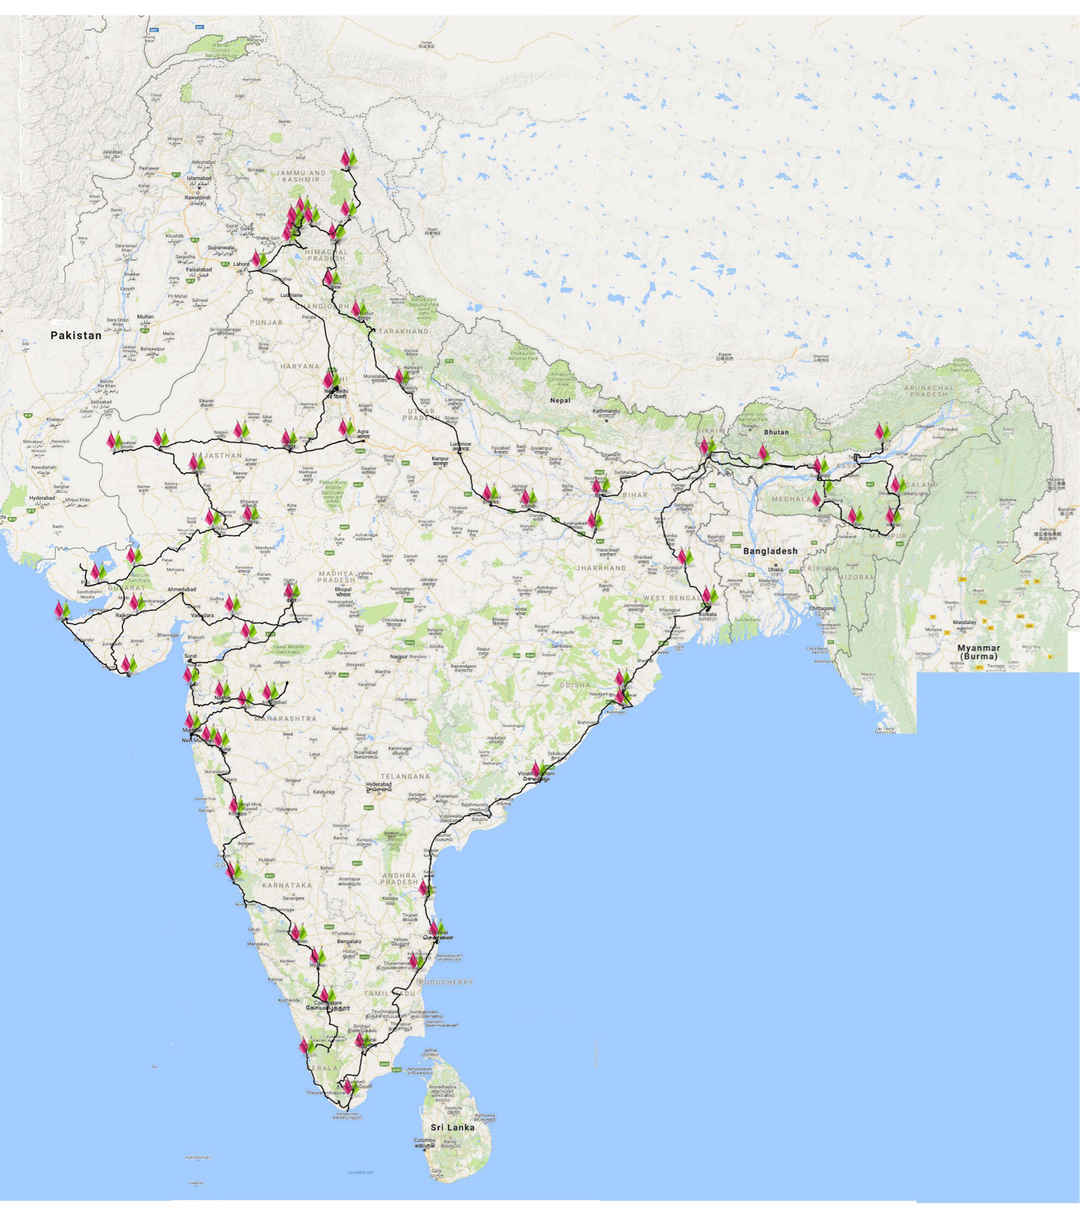 all india trip cost in bike